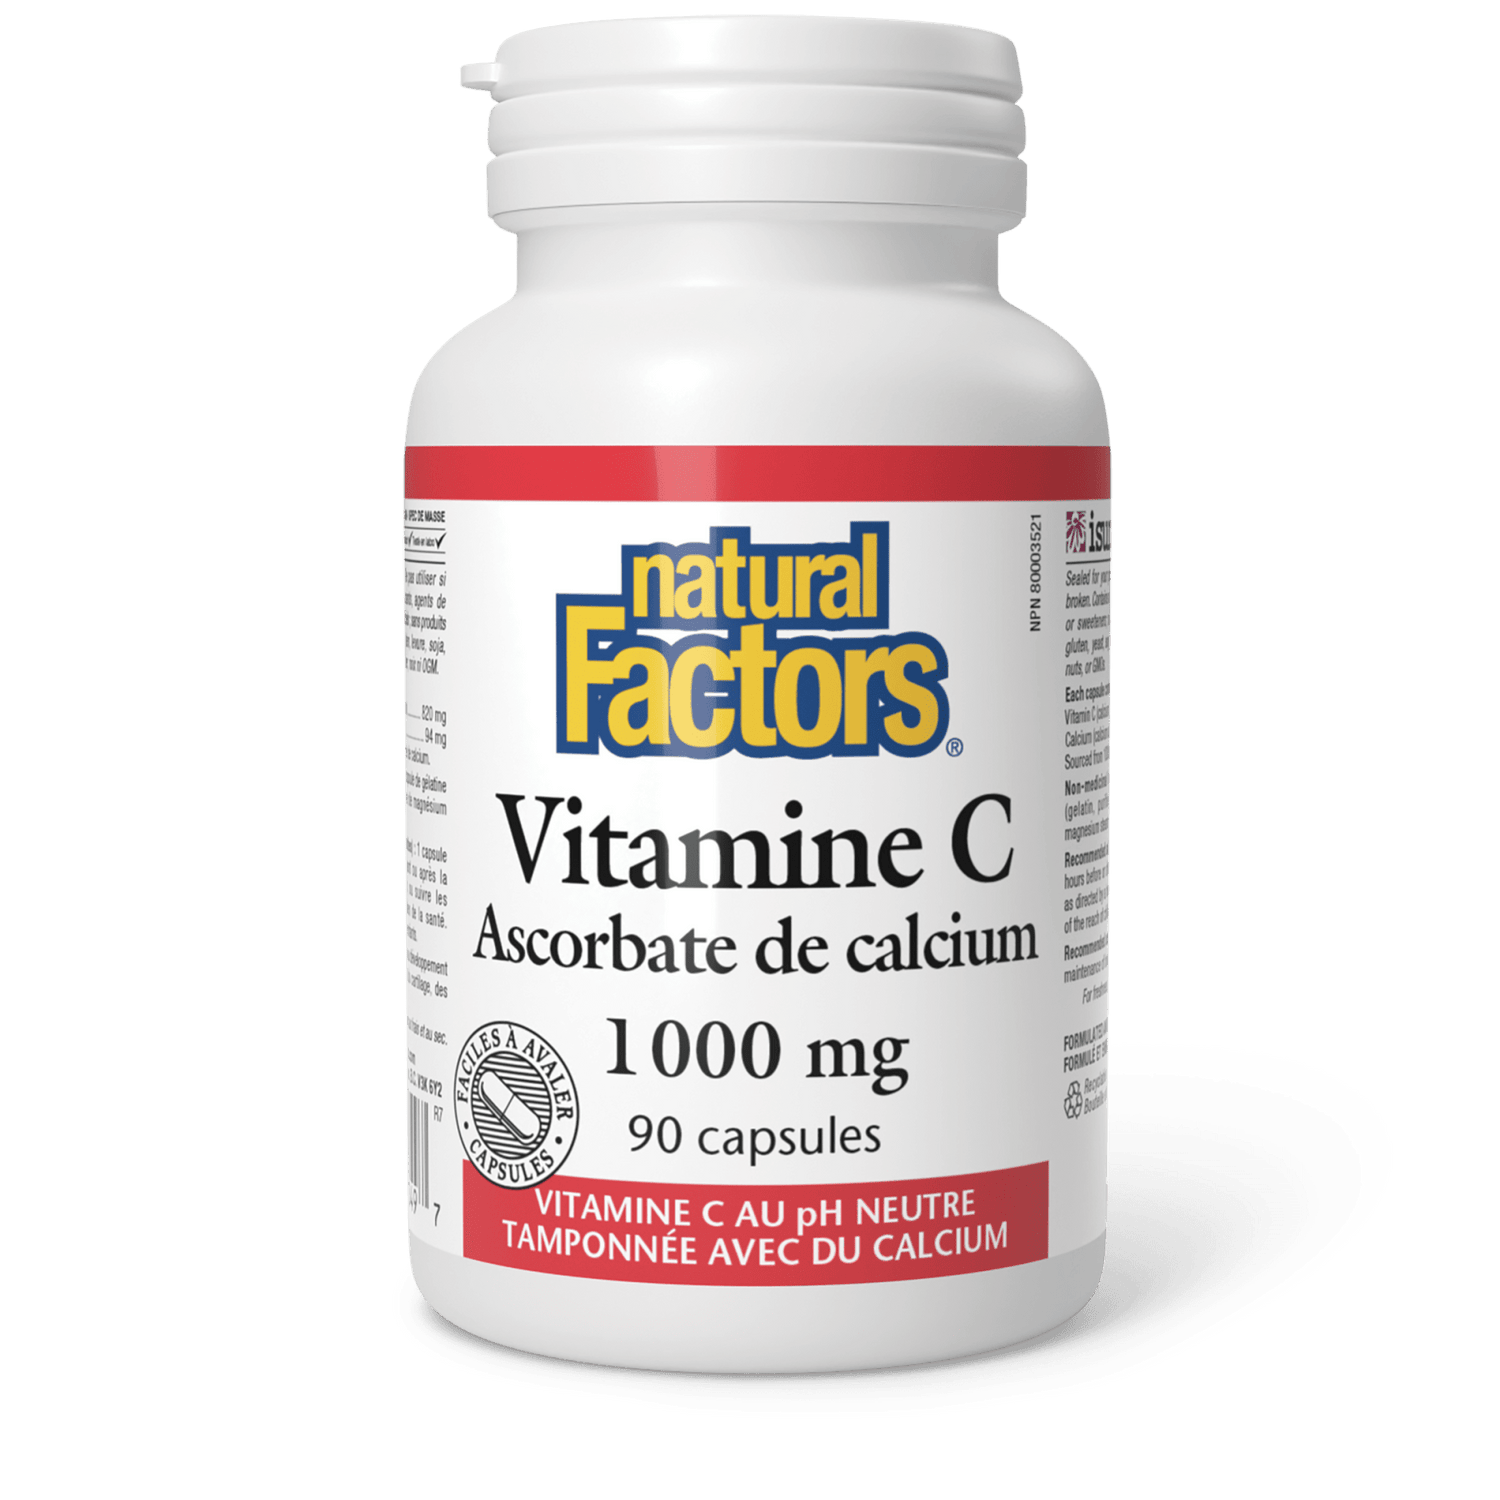 Vitamine C Ascorbate de calcium 1 000 mg, Natural Factors|v|image|1349